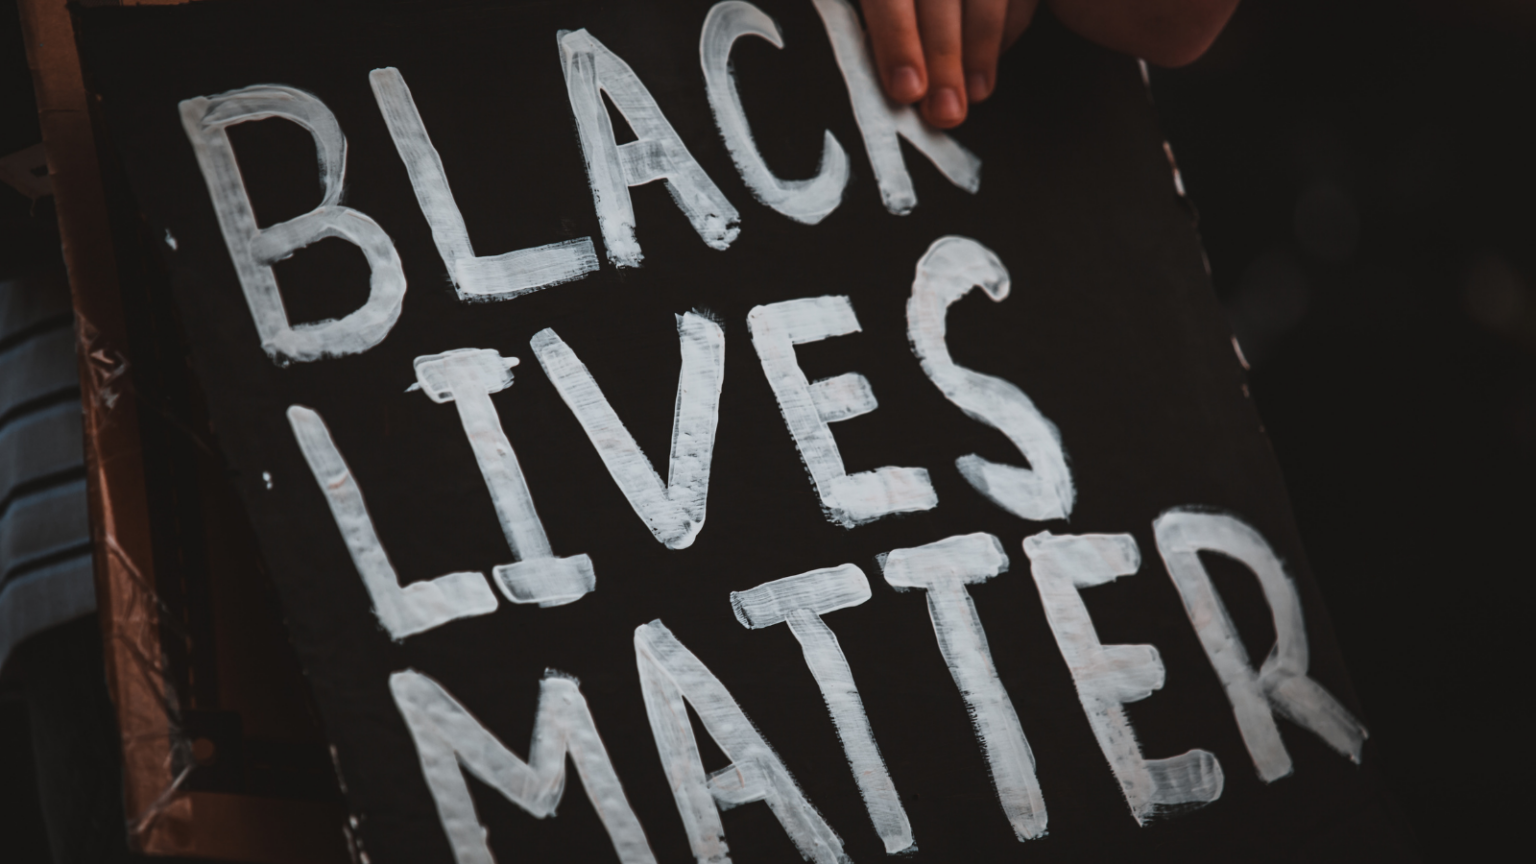 Closeup of a Black Lives Matter sign